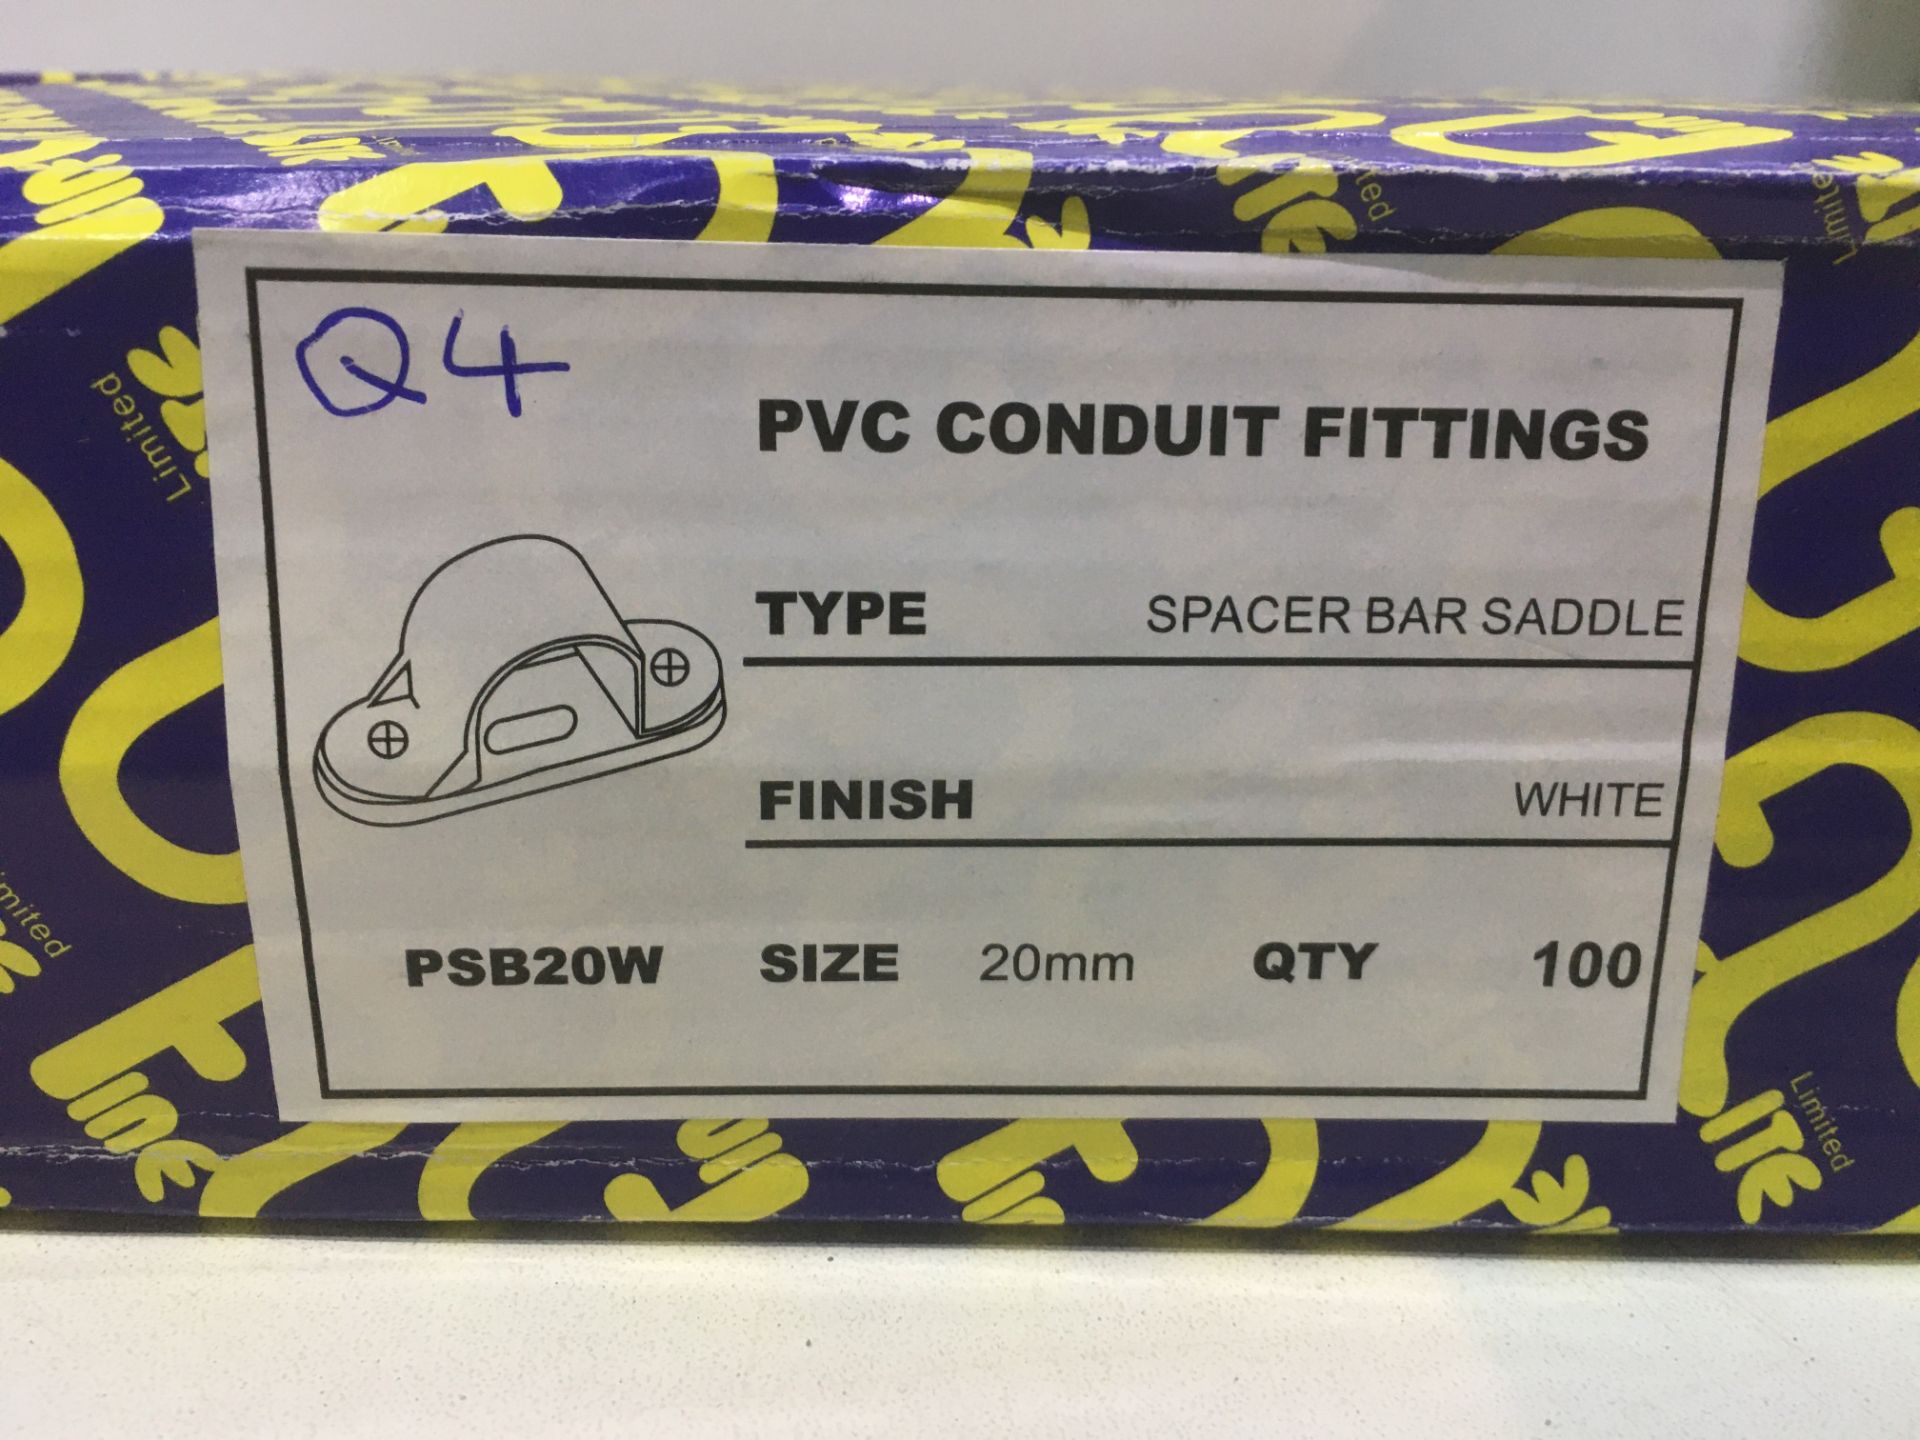 7 x Packs of PVC Conduit Fittings As Per Description - Image 3 of 9